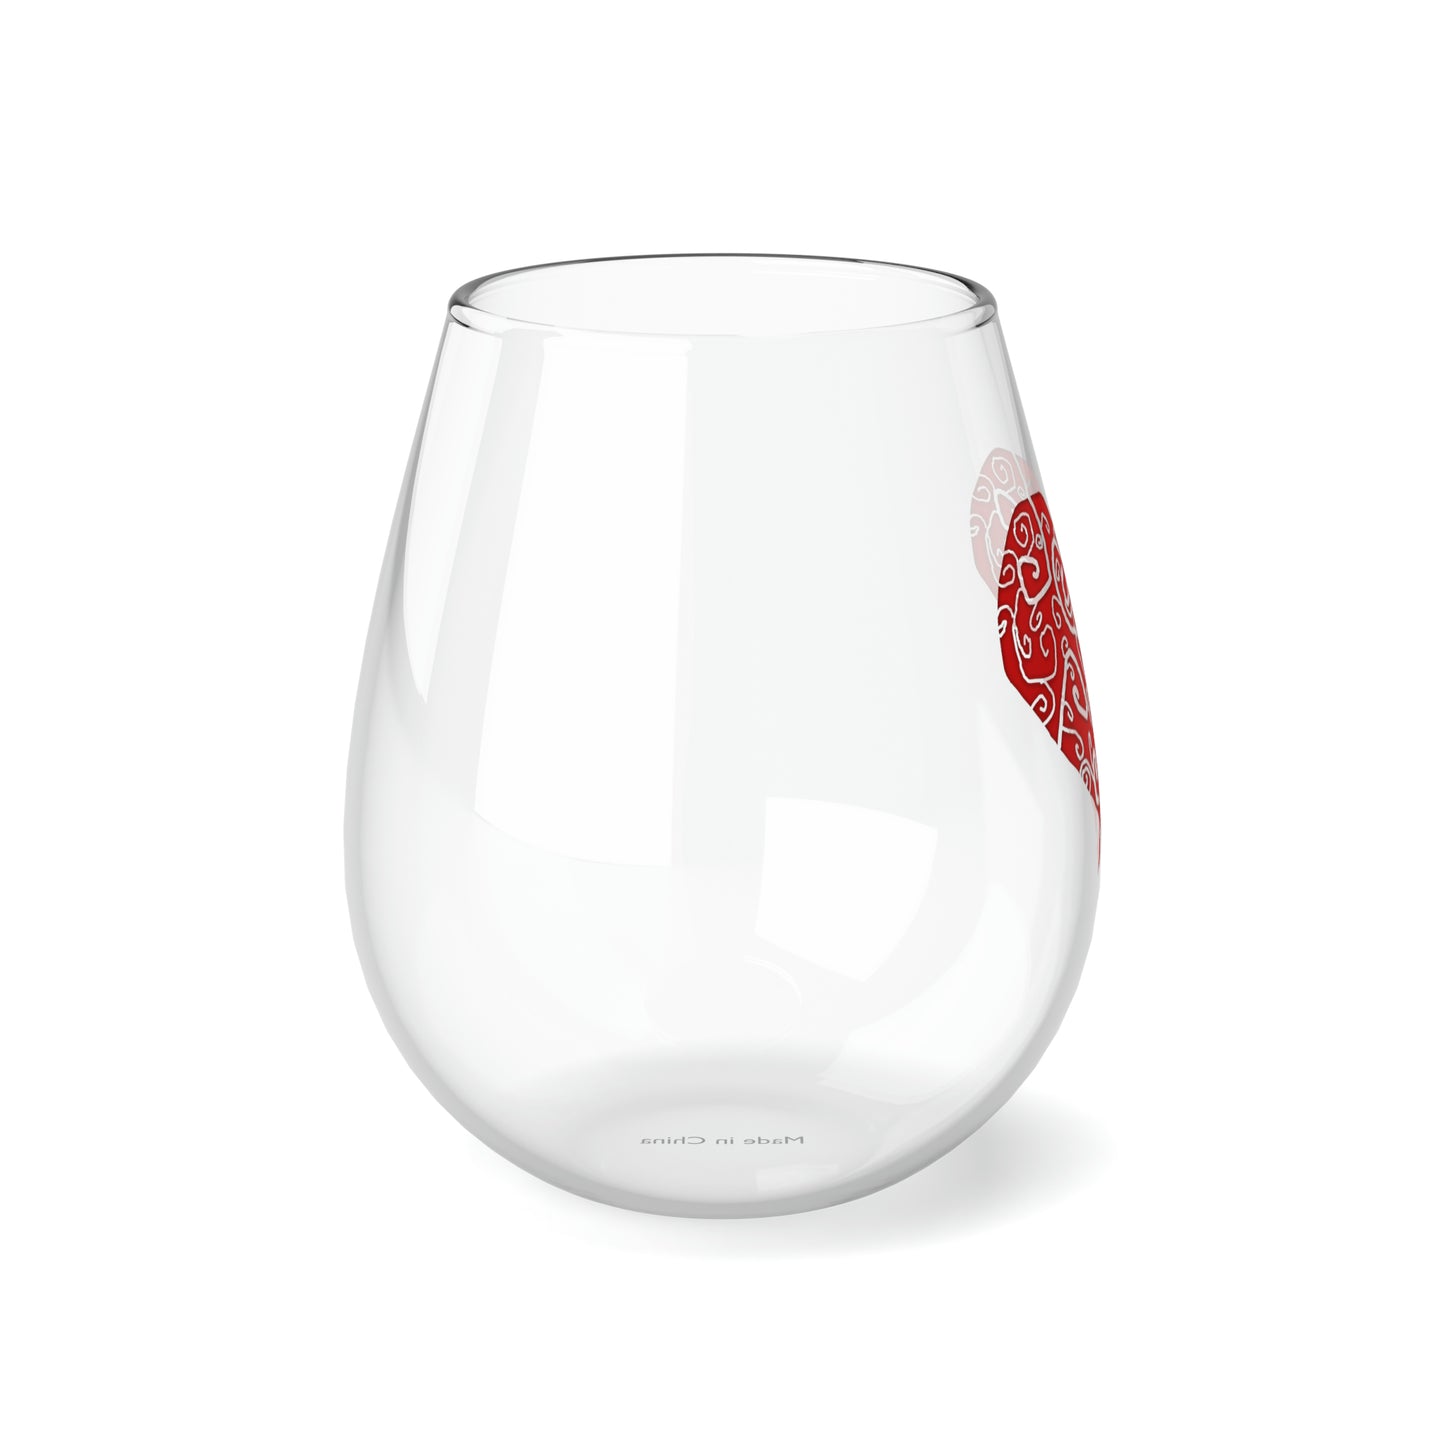 Hearts Swirl Stemless Wine Glass, 11.75oz